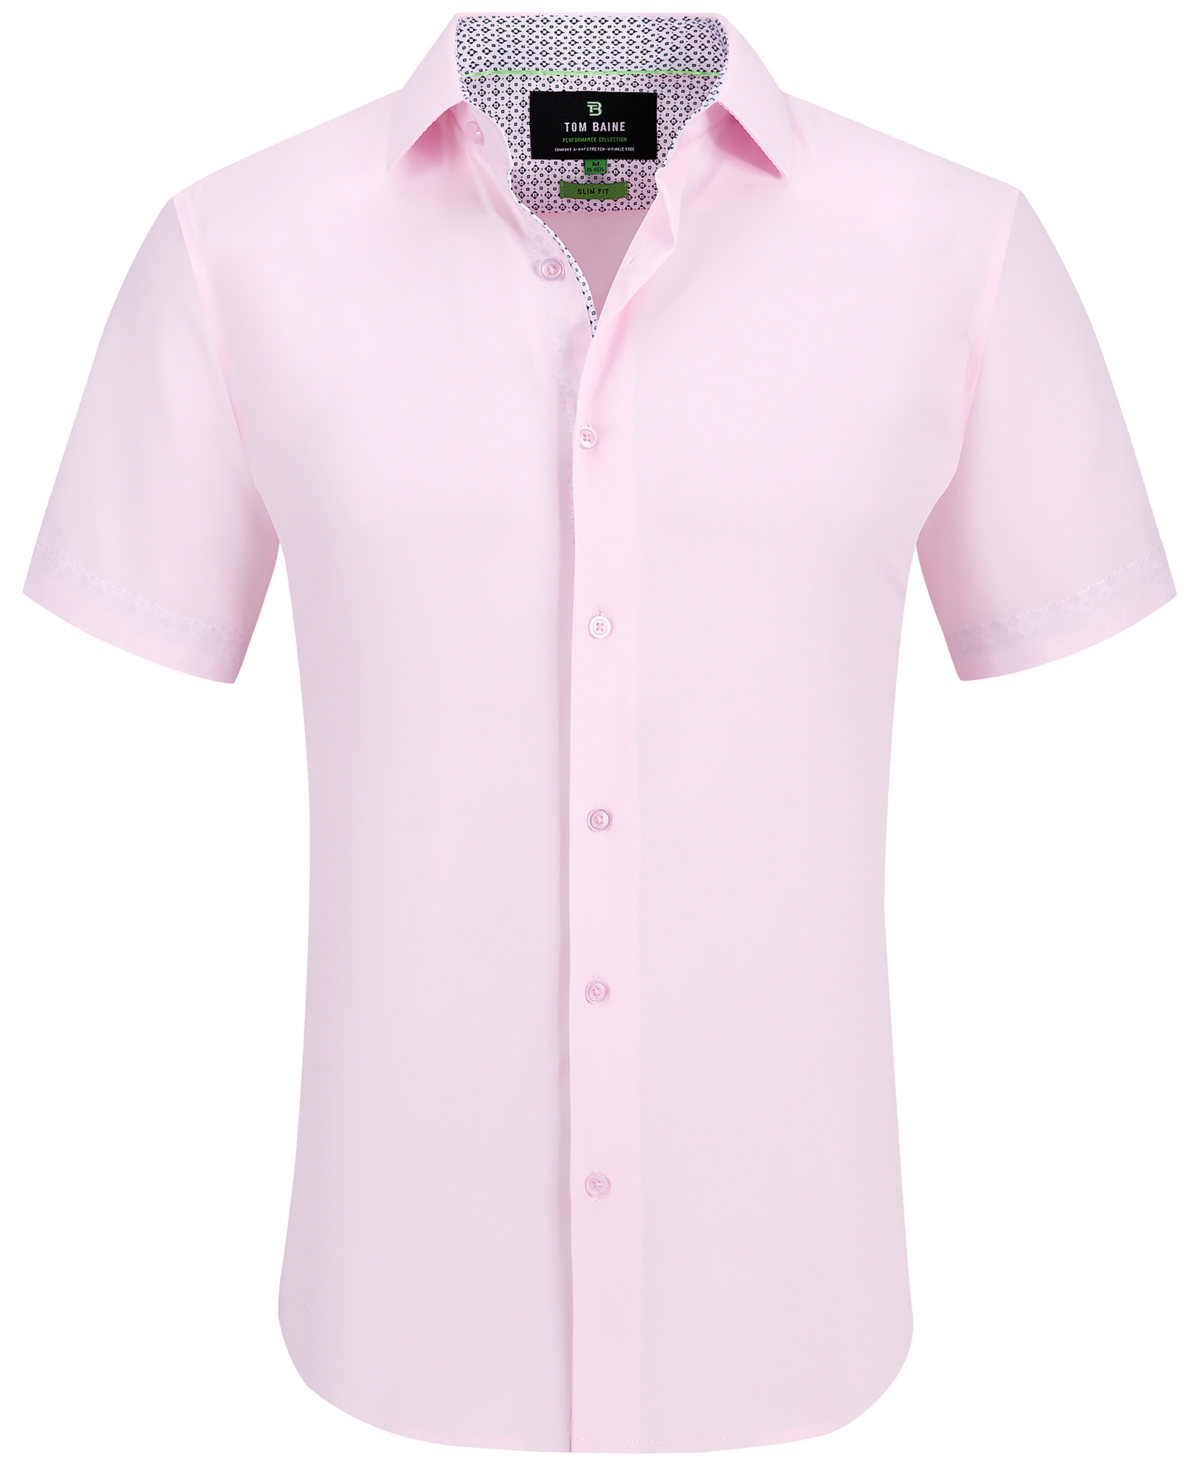 Tom Baine Men's Slim Fit Short Sleeve Performance Button Down Dress Shirt In Light Pink